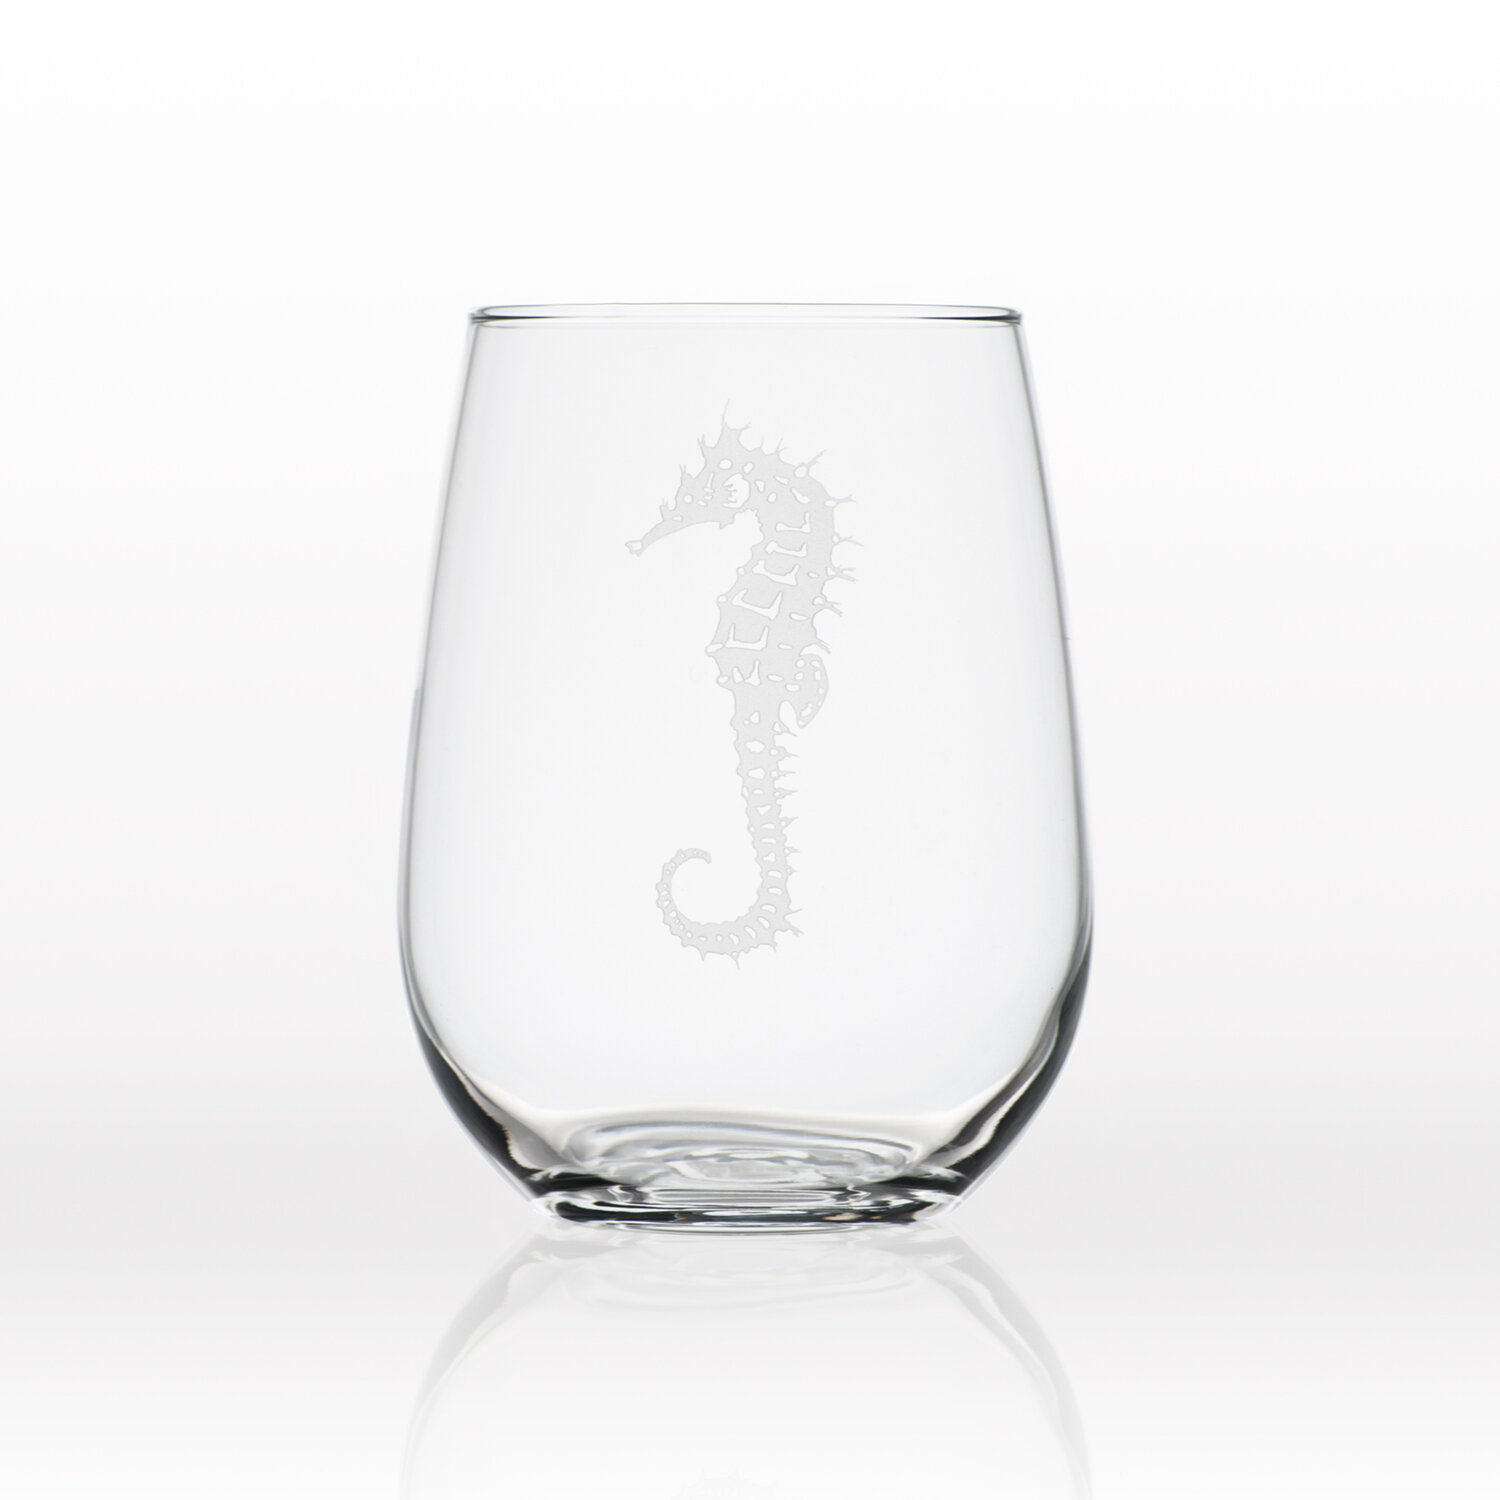 Rolf Glass Seahorse 17 oz. Stemless Wine Glass & Reviews | Wayfair